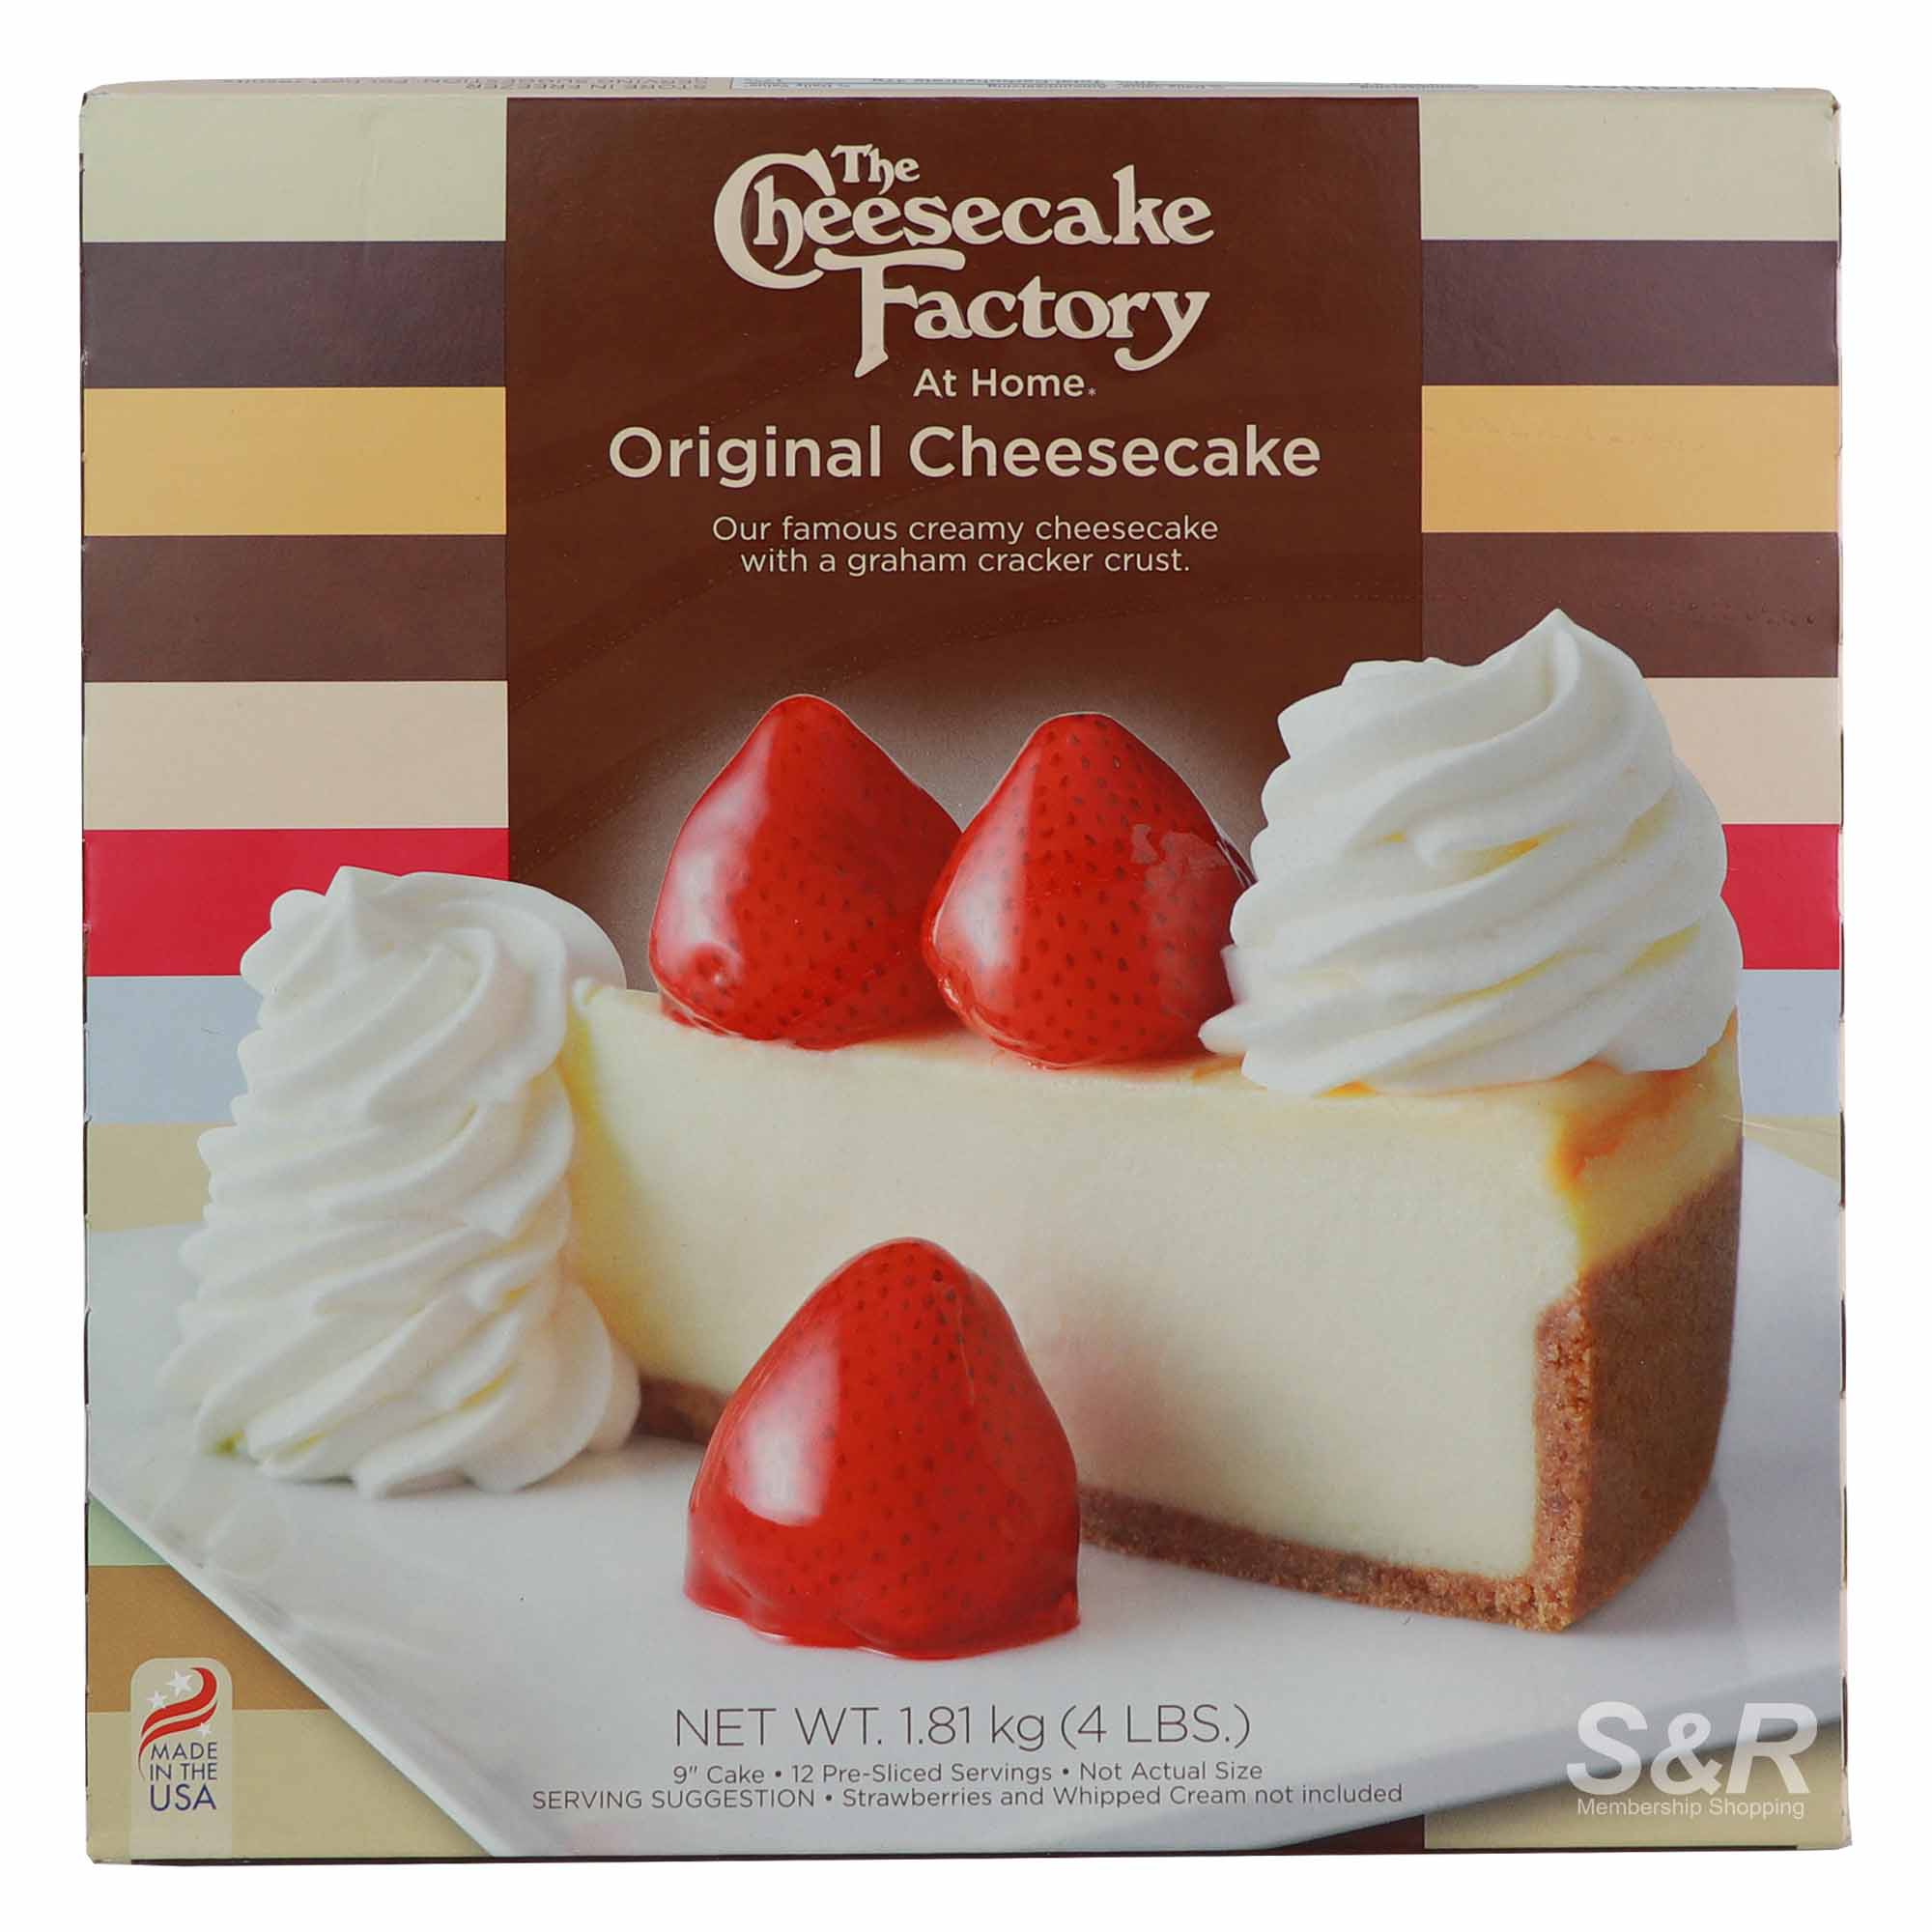 The Cheesecake Factory Original Cheesecake 9-inch